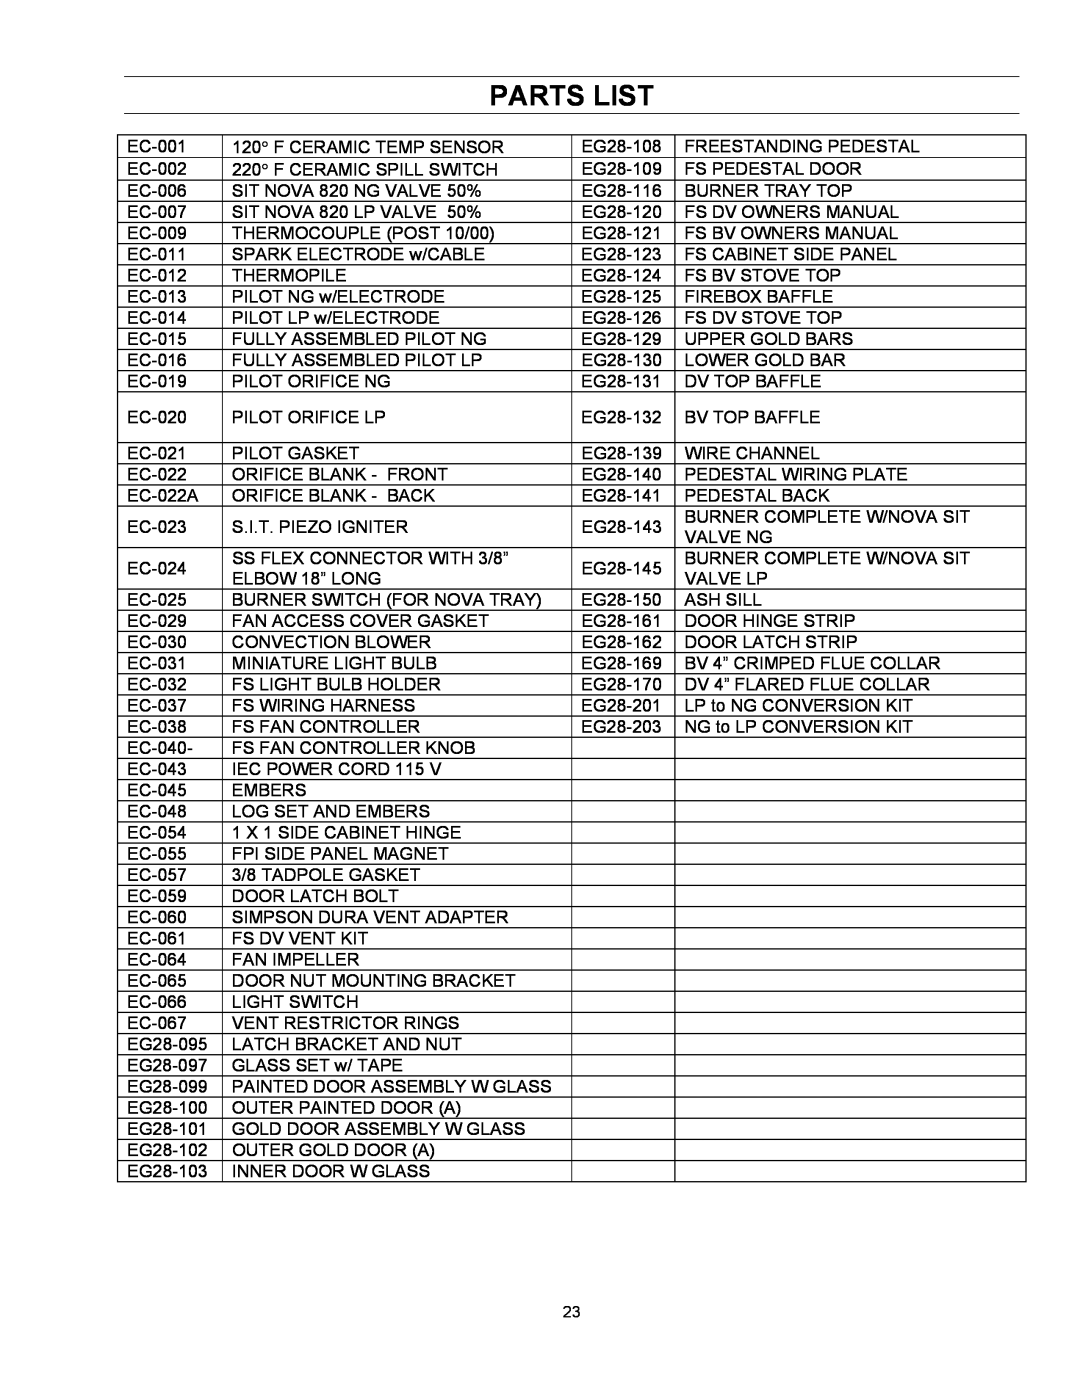 Enviro EG 28 owner manual Parts List 